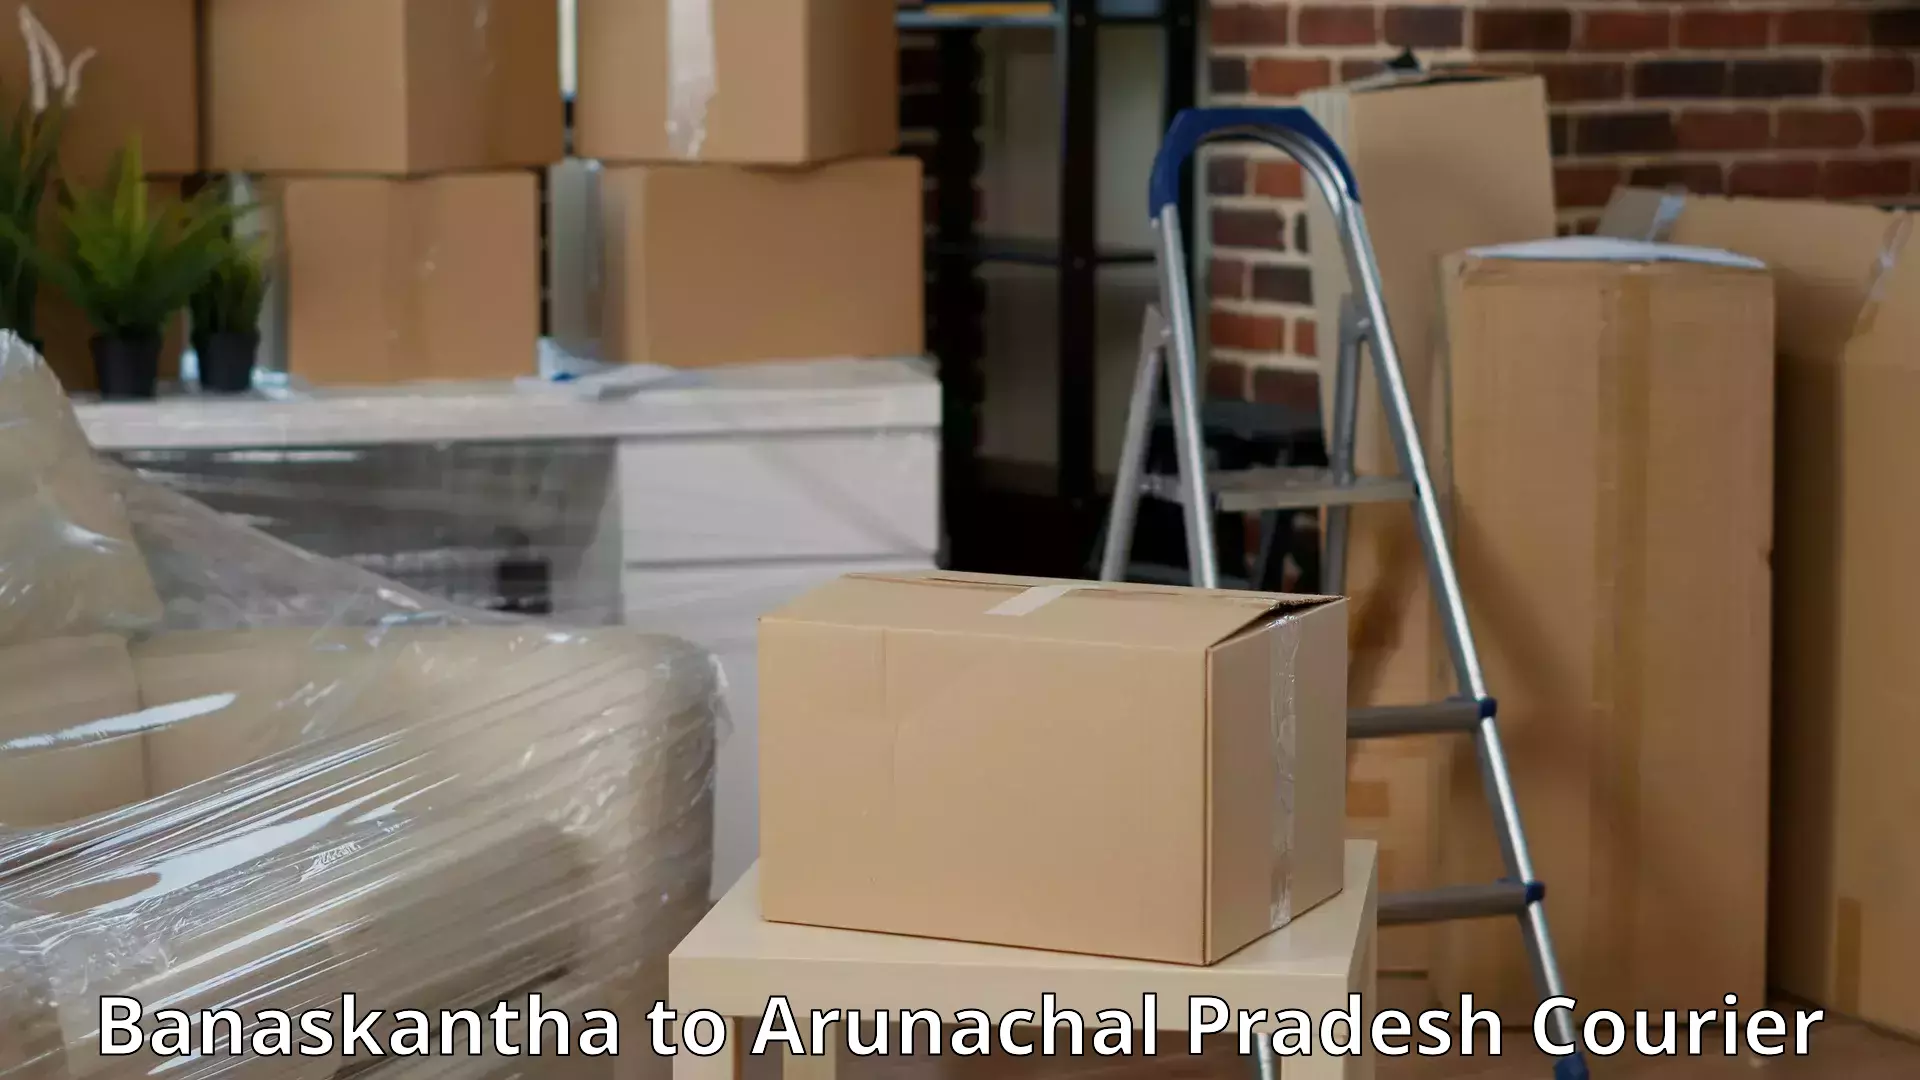 Professional moving company Banaskantha to Arunachal Pradesh